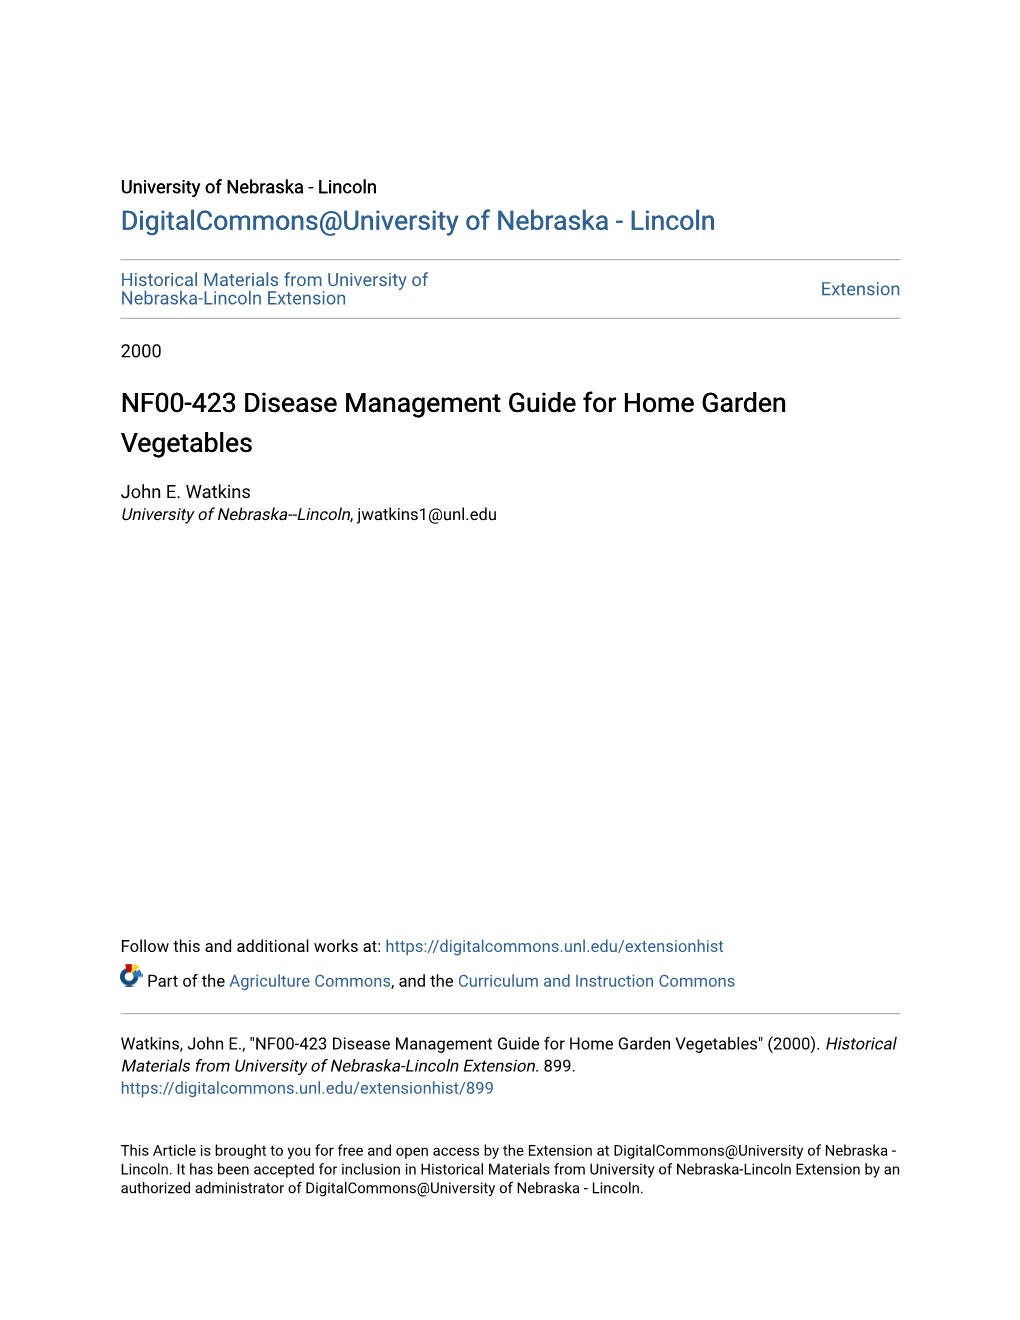 NF00-423 Disease Management Guide for Home Garden Vegetables